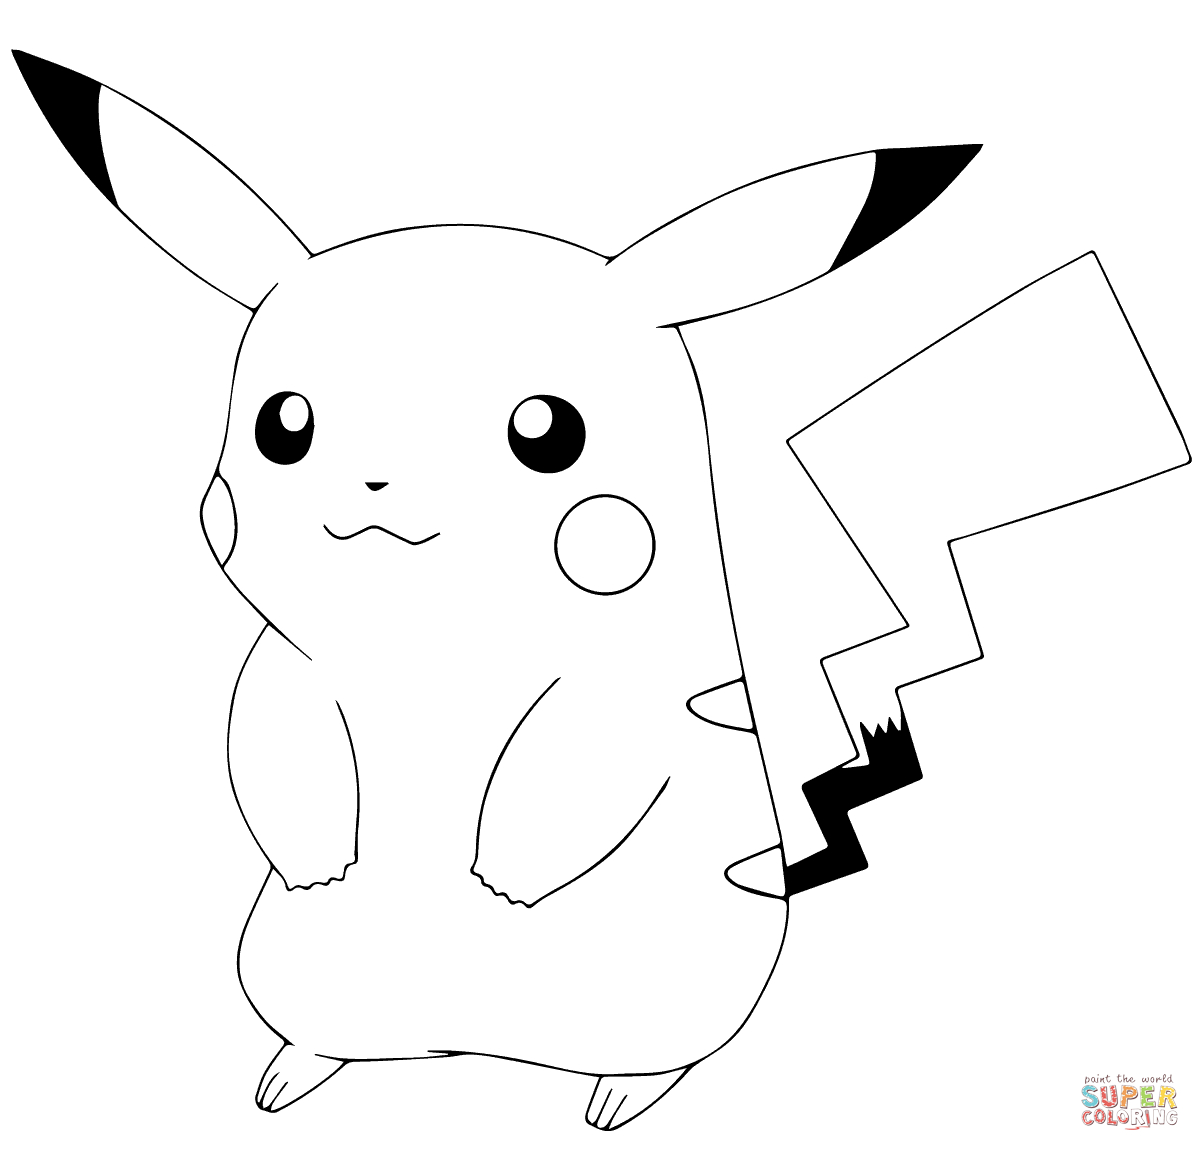 Pokémon Go Pikachu Coloring Page | Free Printable Coloring Pages - Free Printable Pokemon Coloring Pages